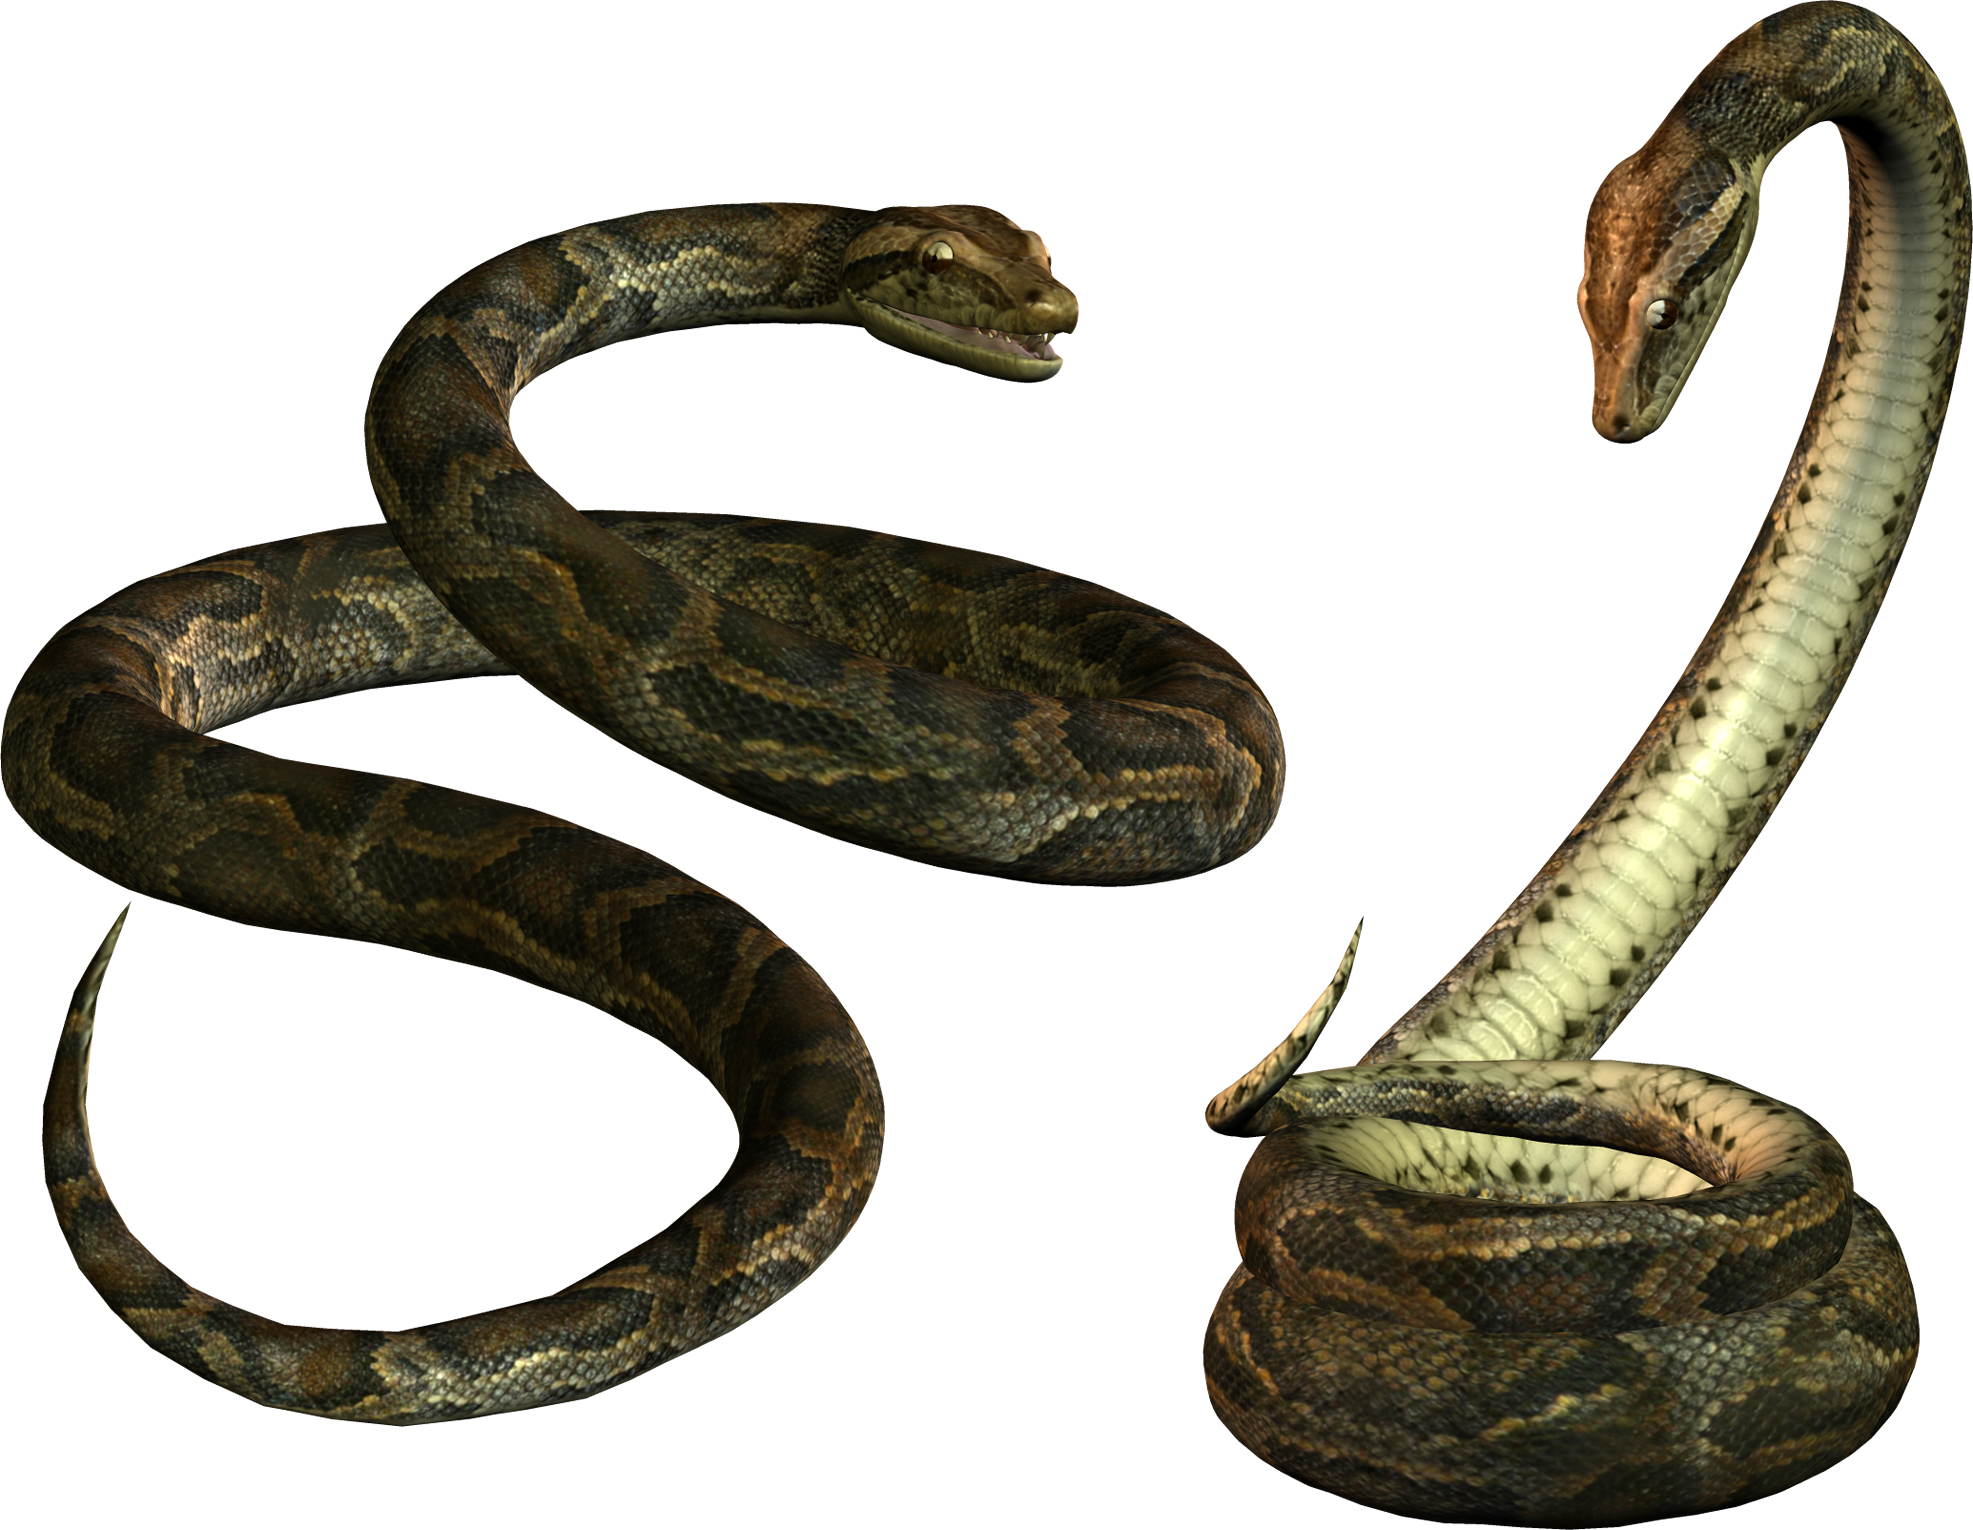  Snake  PNG  Snake  Transparent Background FreeIconsPNG